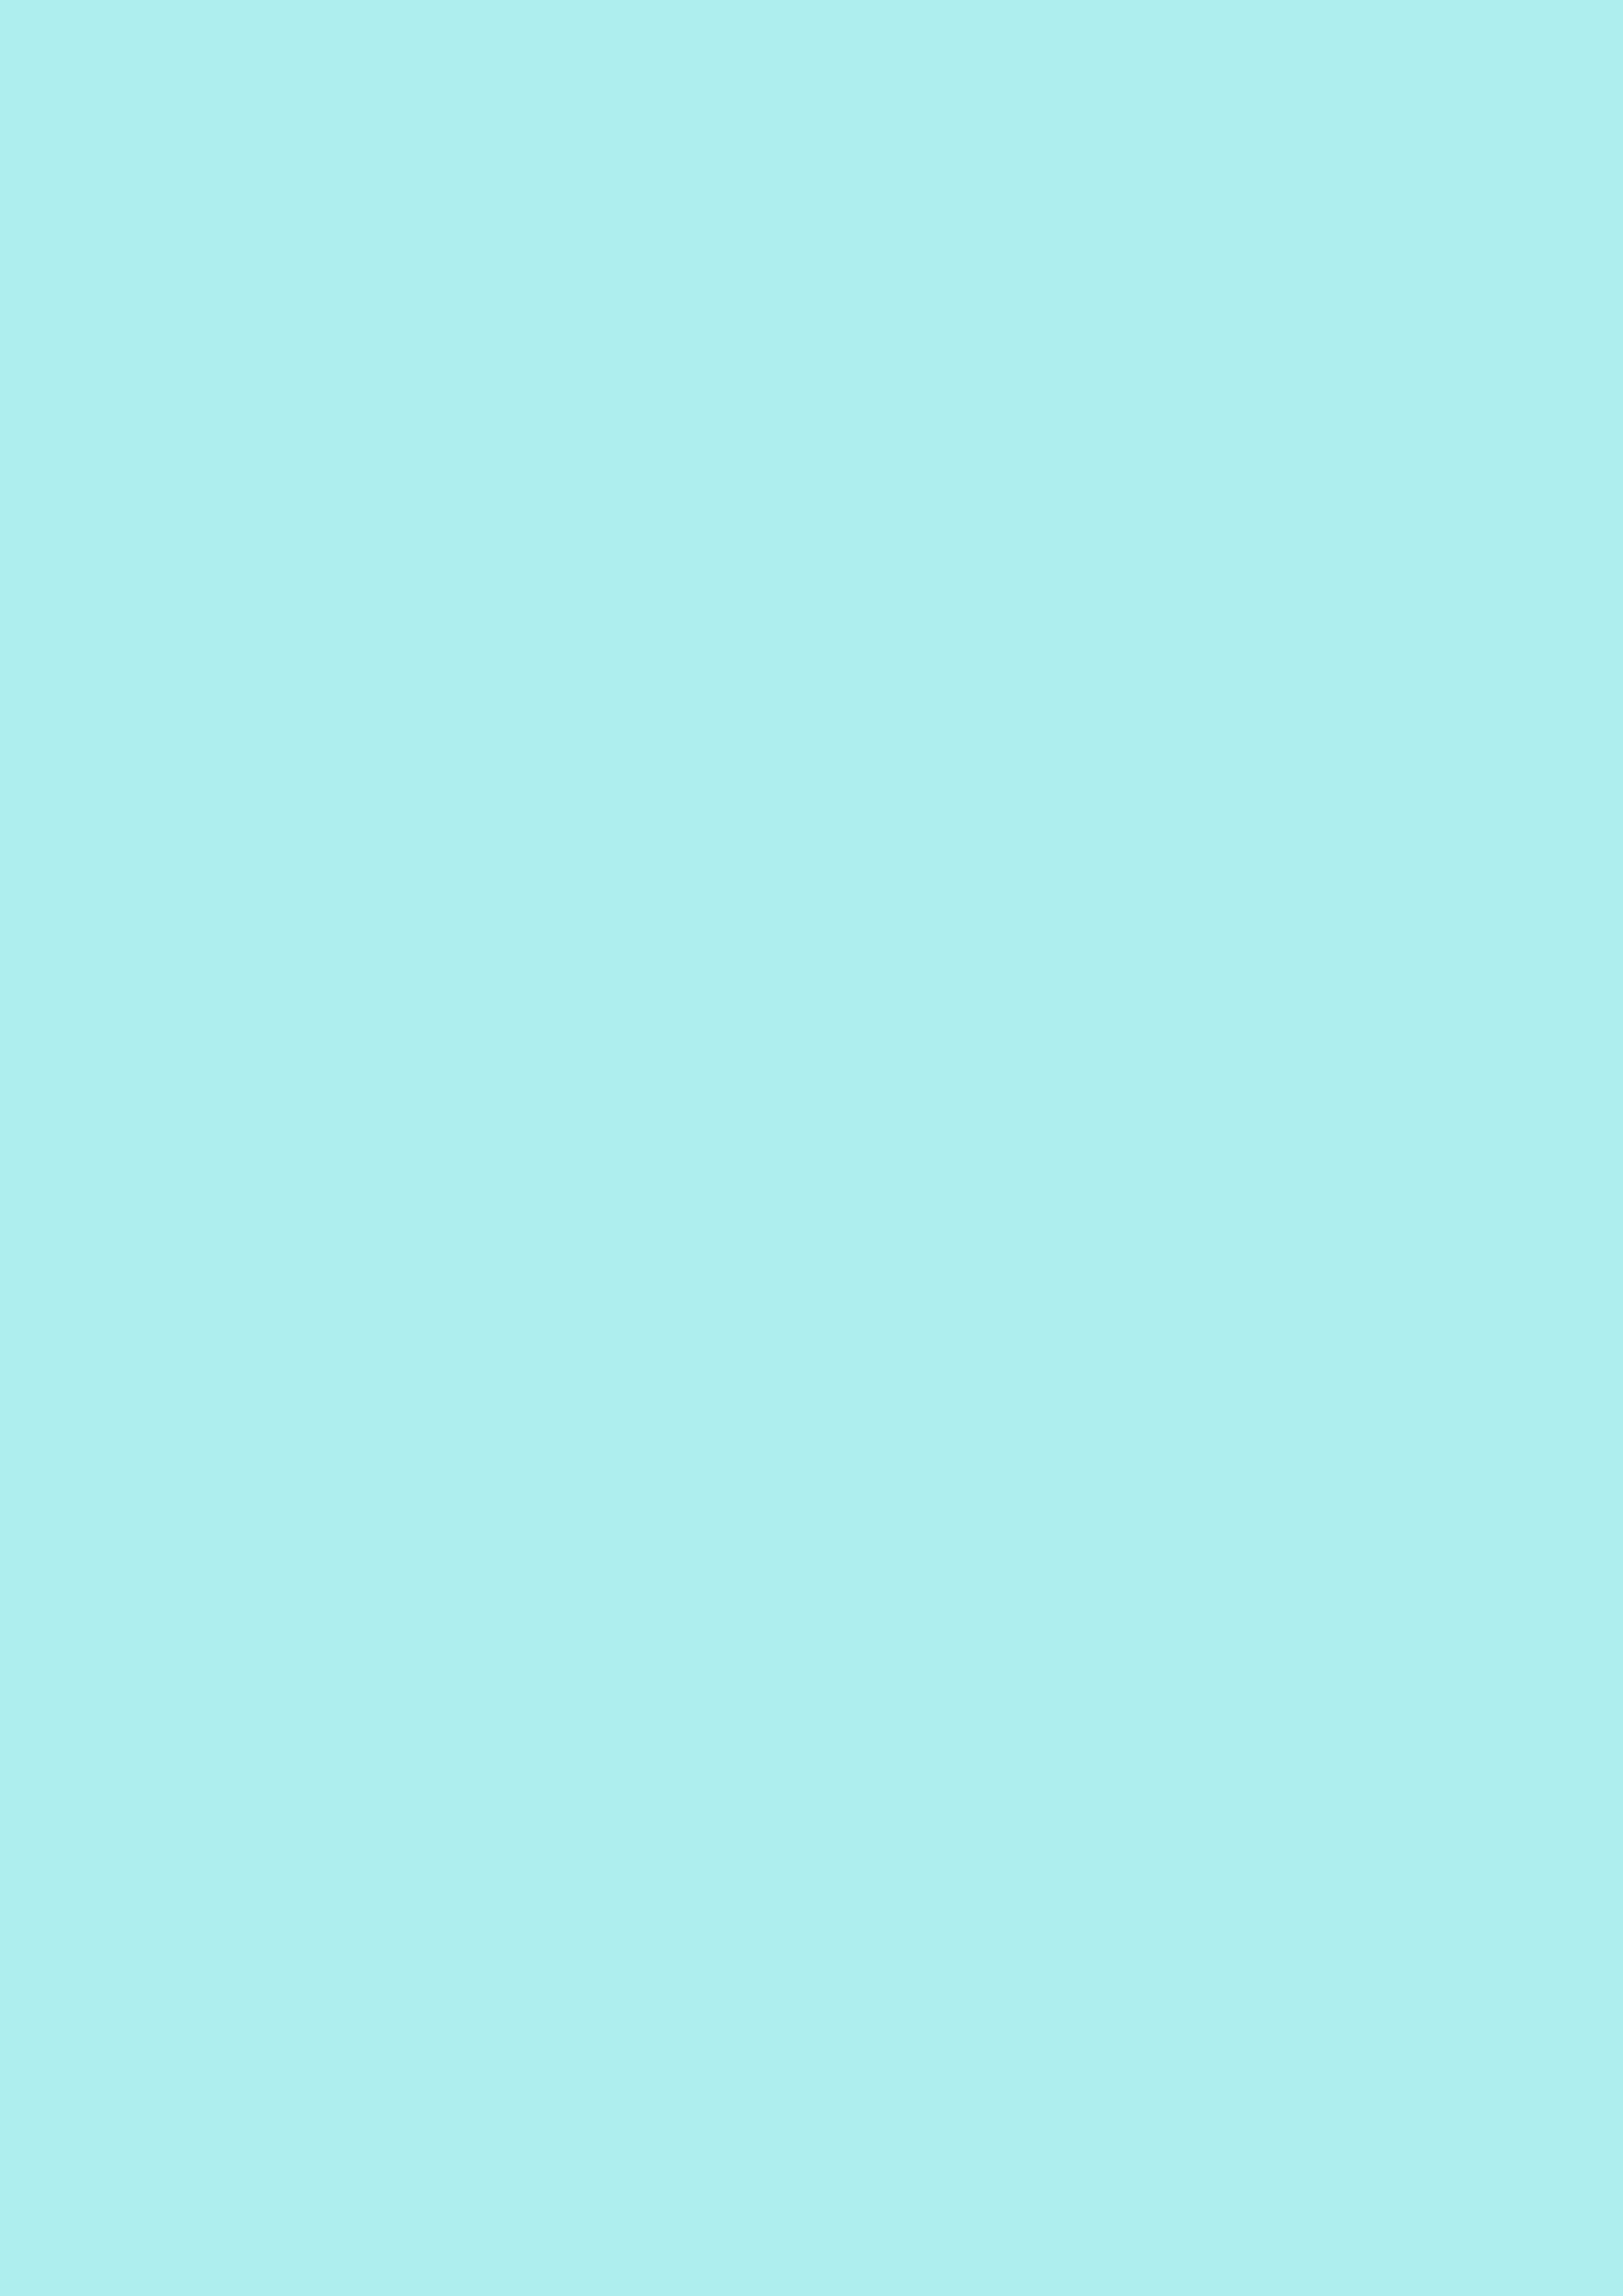 2480x3508 Pale Blue Solid Color Background